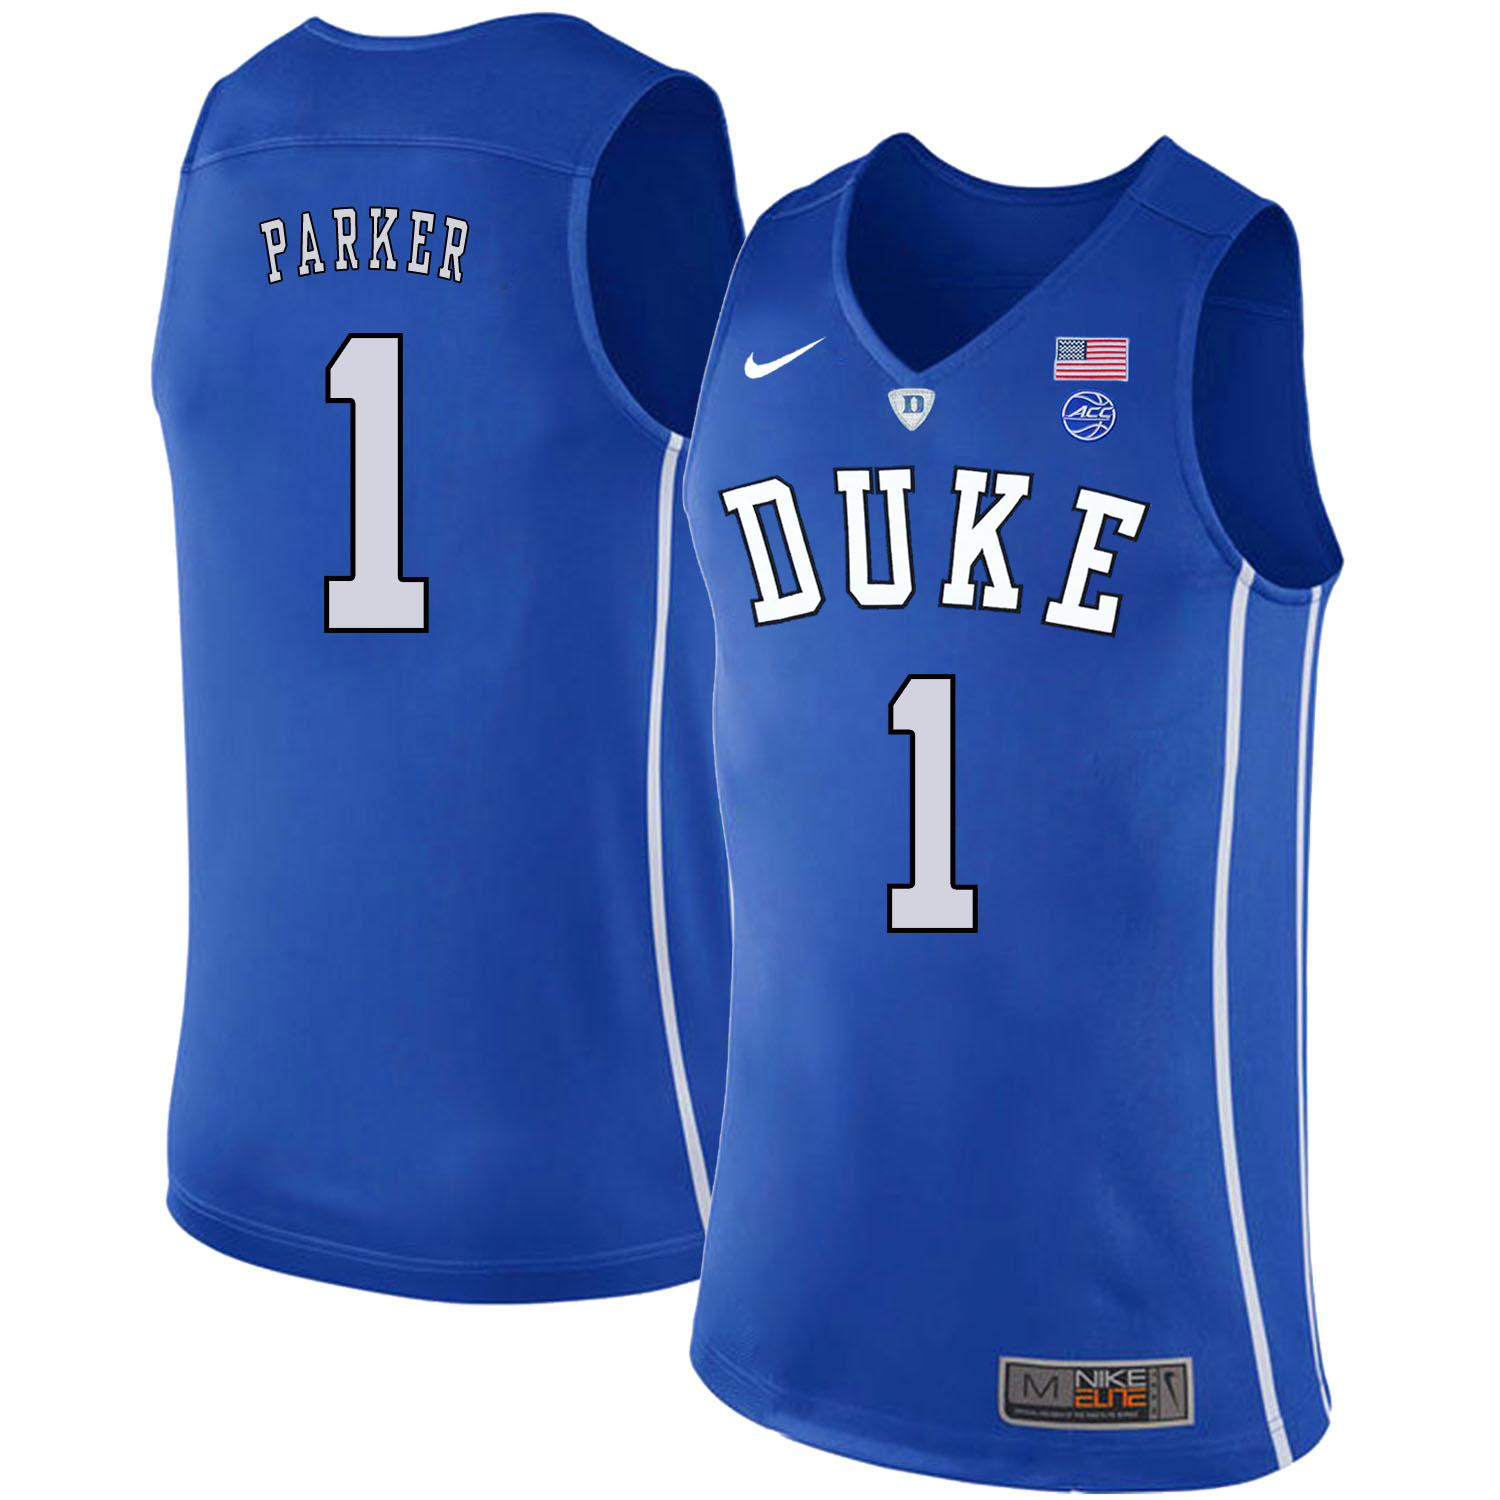 Duke Blue Devils 1 Jabari Parker Blue Nike College Basketabll Jersey